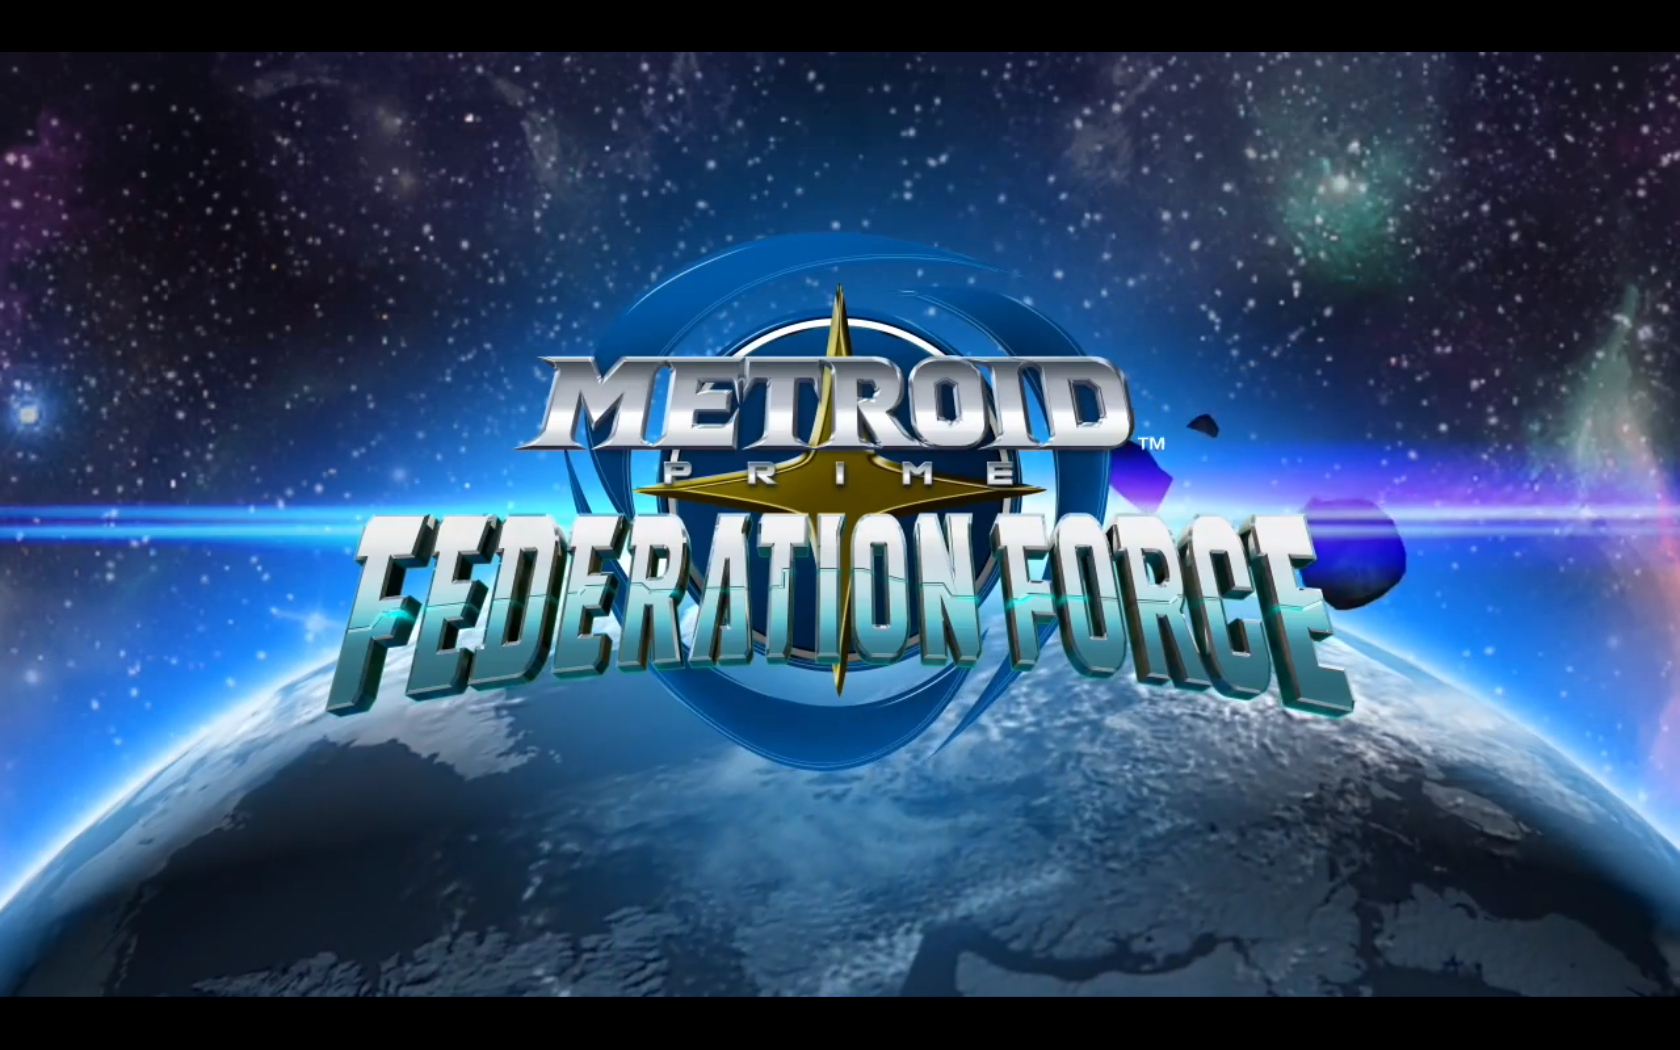 federationforce_title